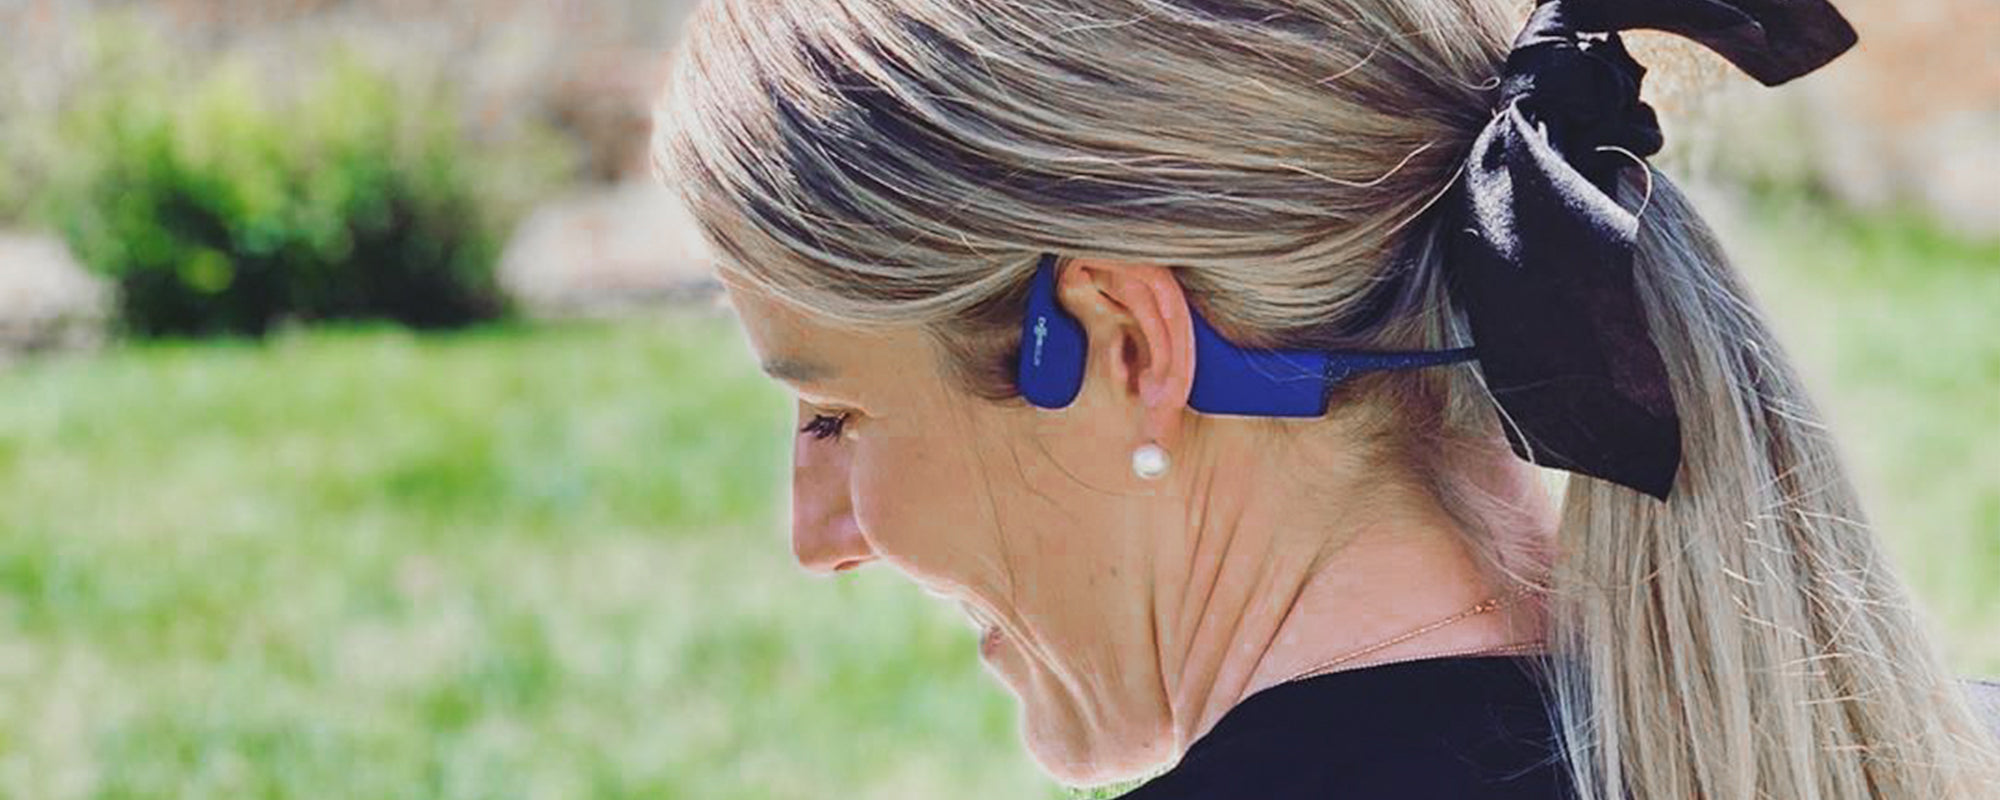 Olympic swimmer Missy Franklin wearing AfterShokz Xtrainerz headphones